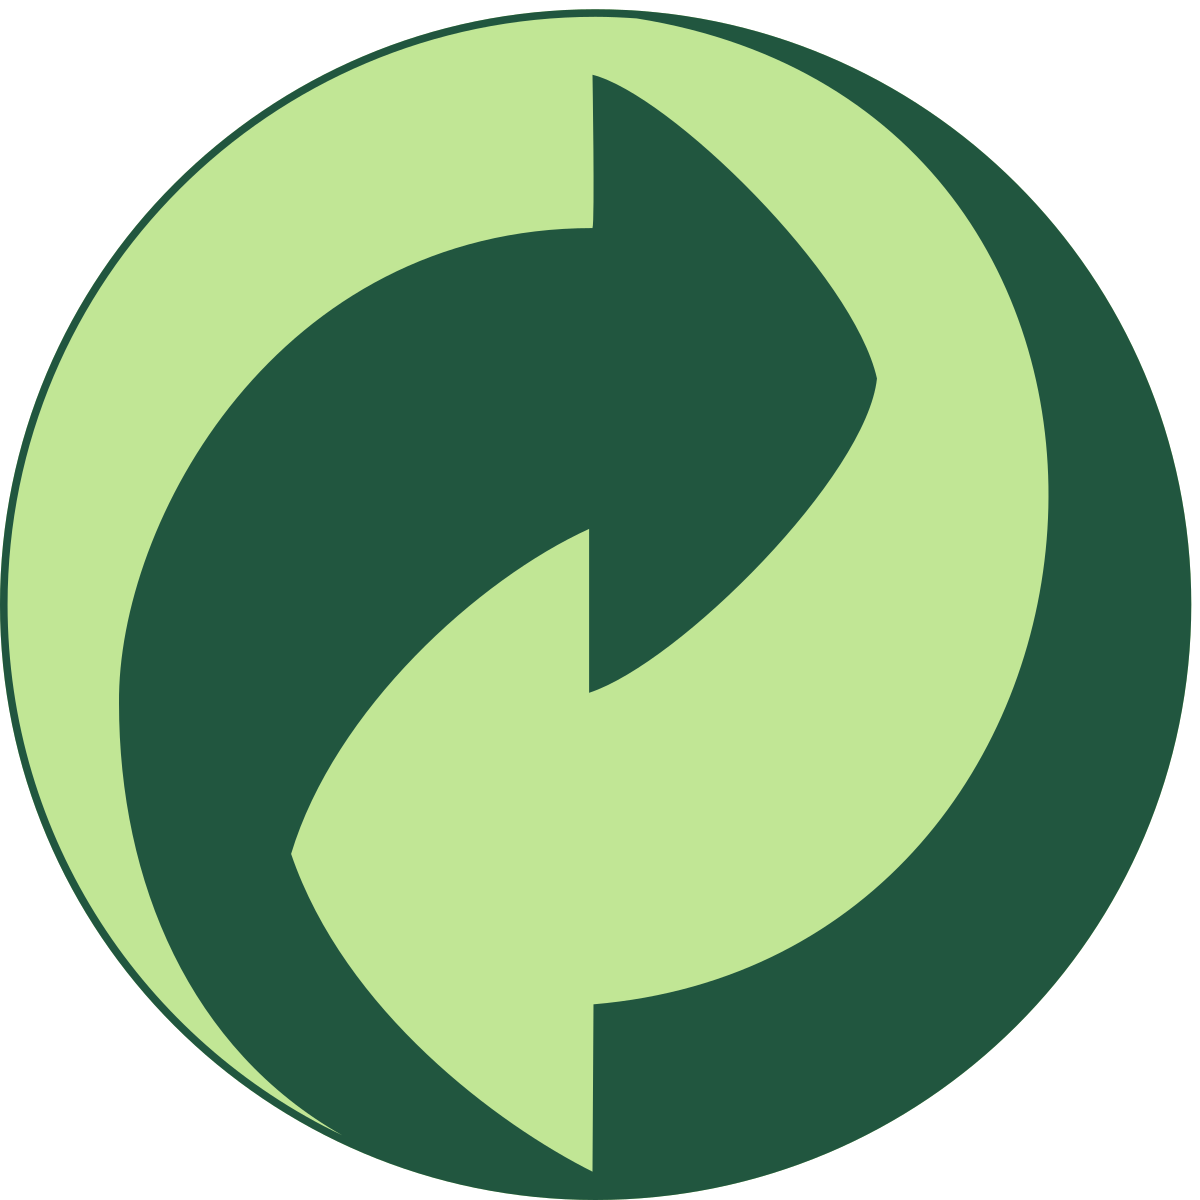 The green dot symbol